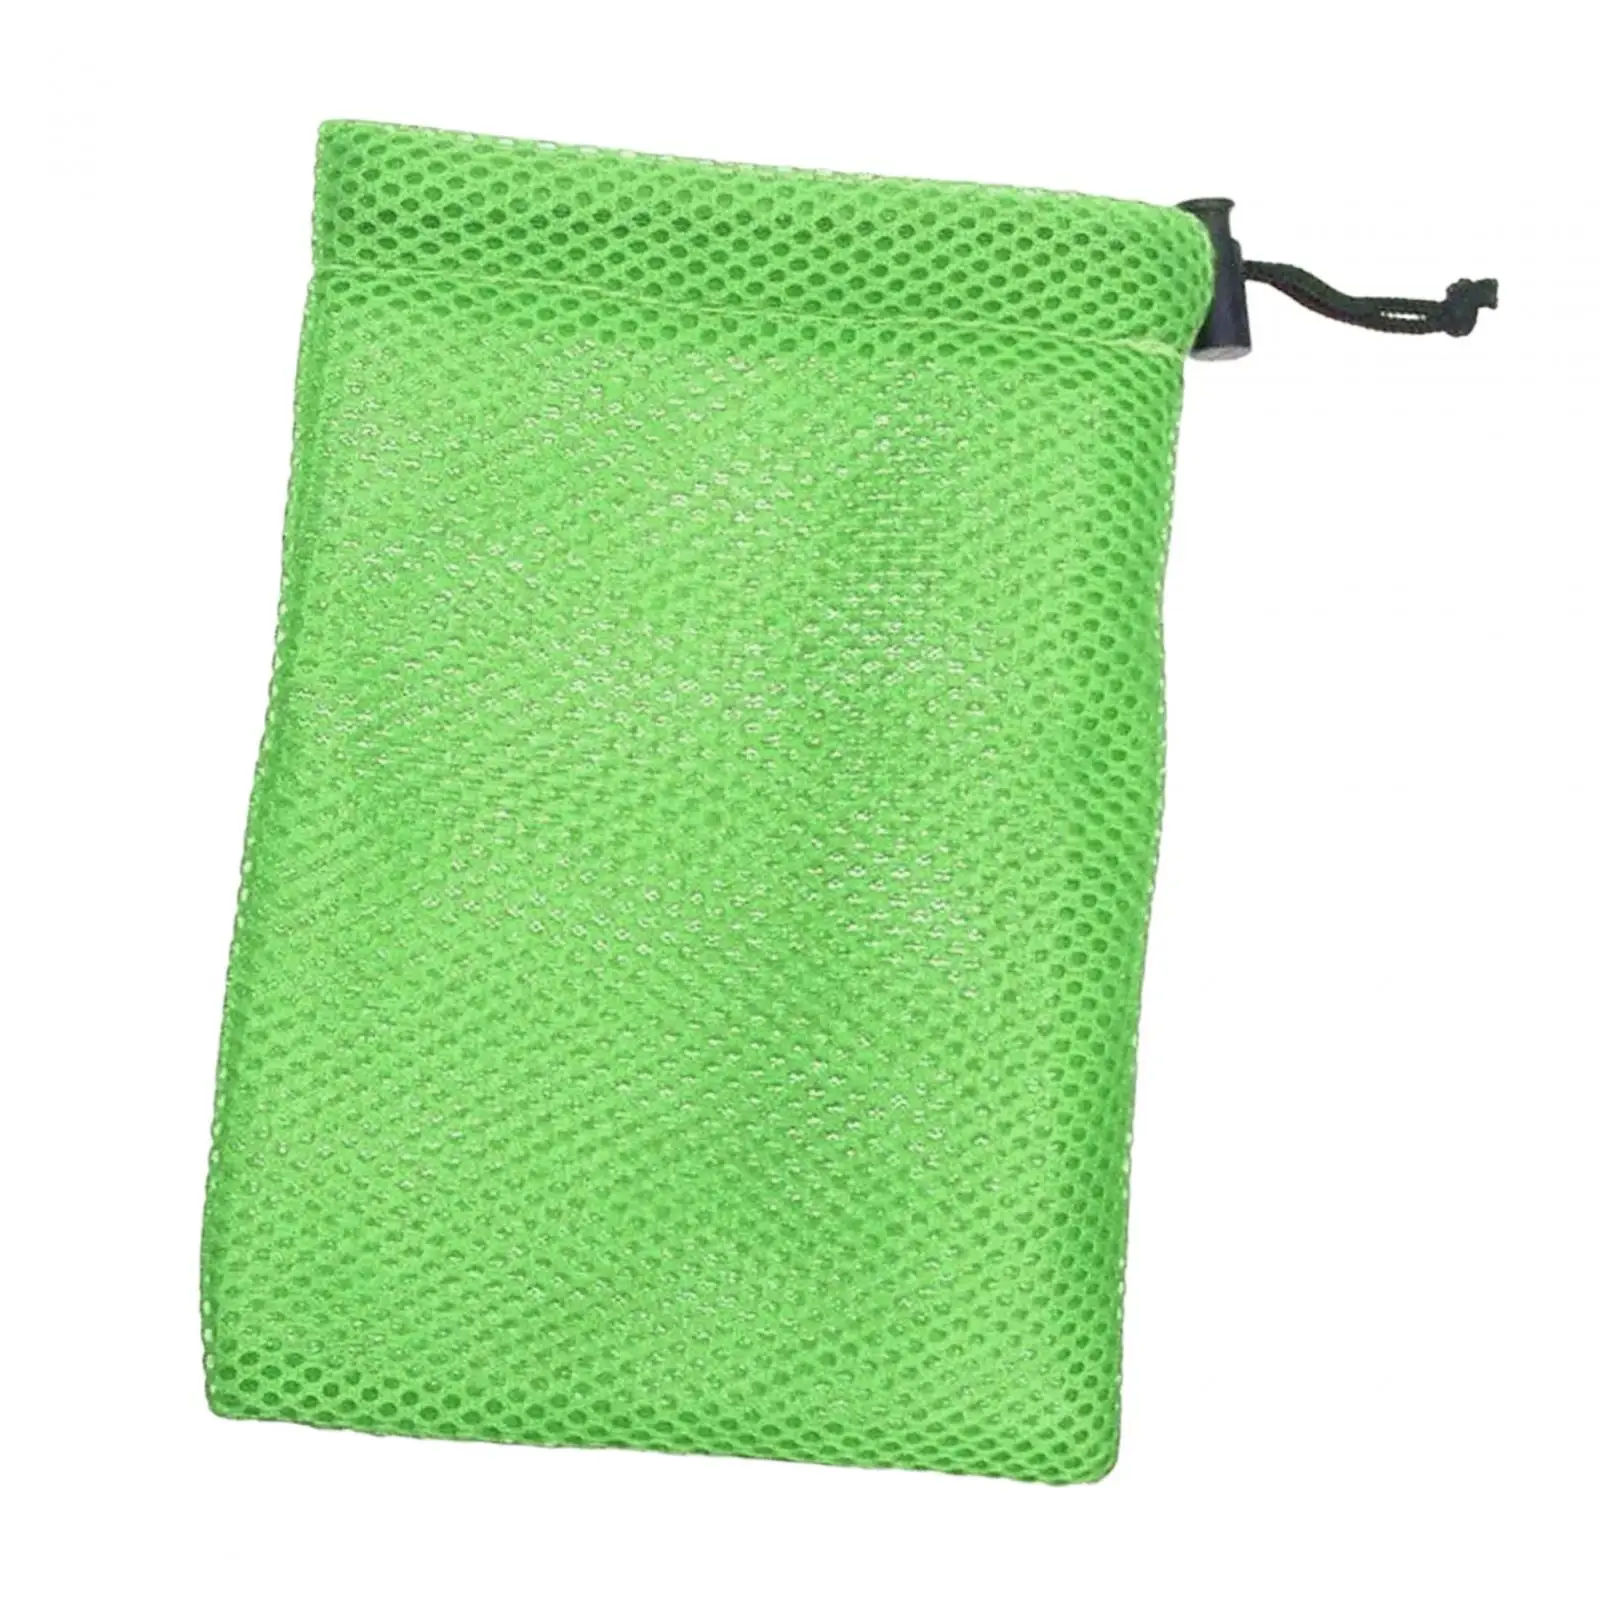 Small Mesh Drawstring Bag Storage Pouch Lightweight Stuff Sack Mesh Bag for Cosmetics Tennis Balls Outdoor Activities Camping